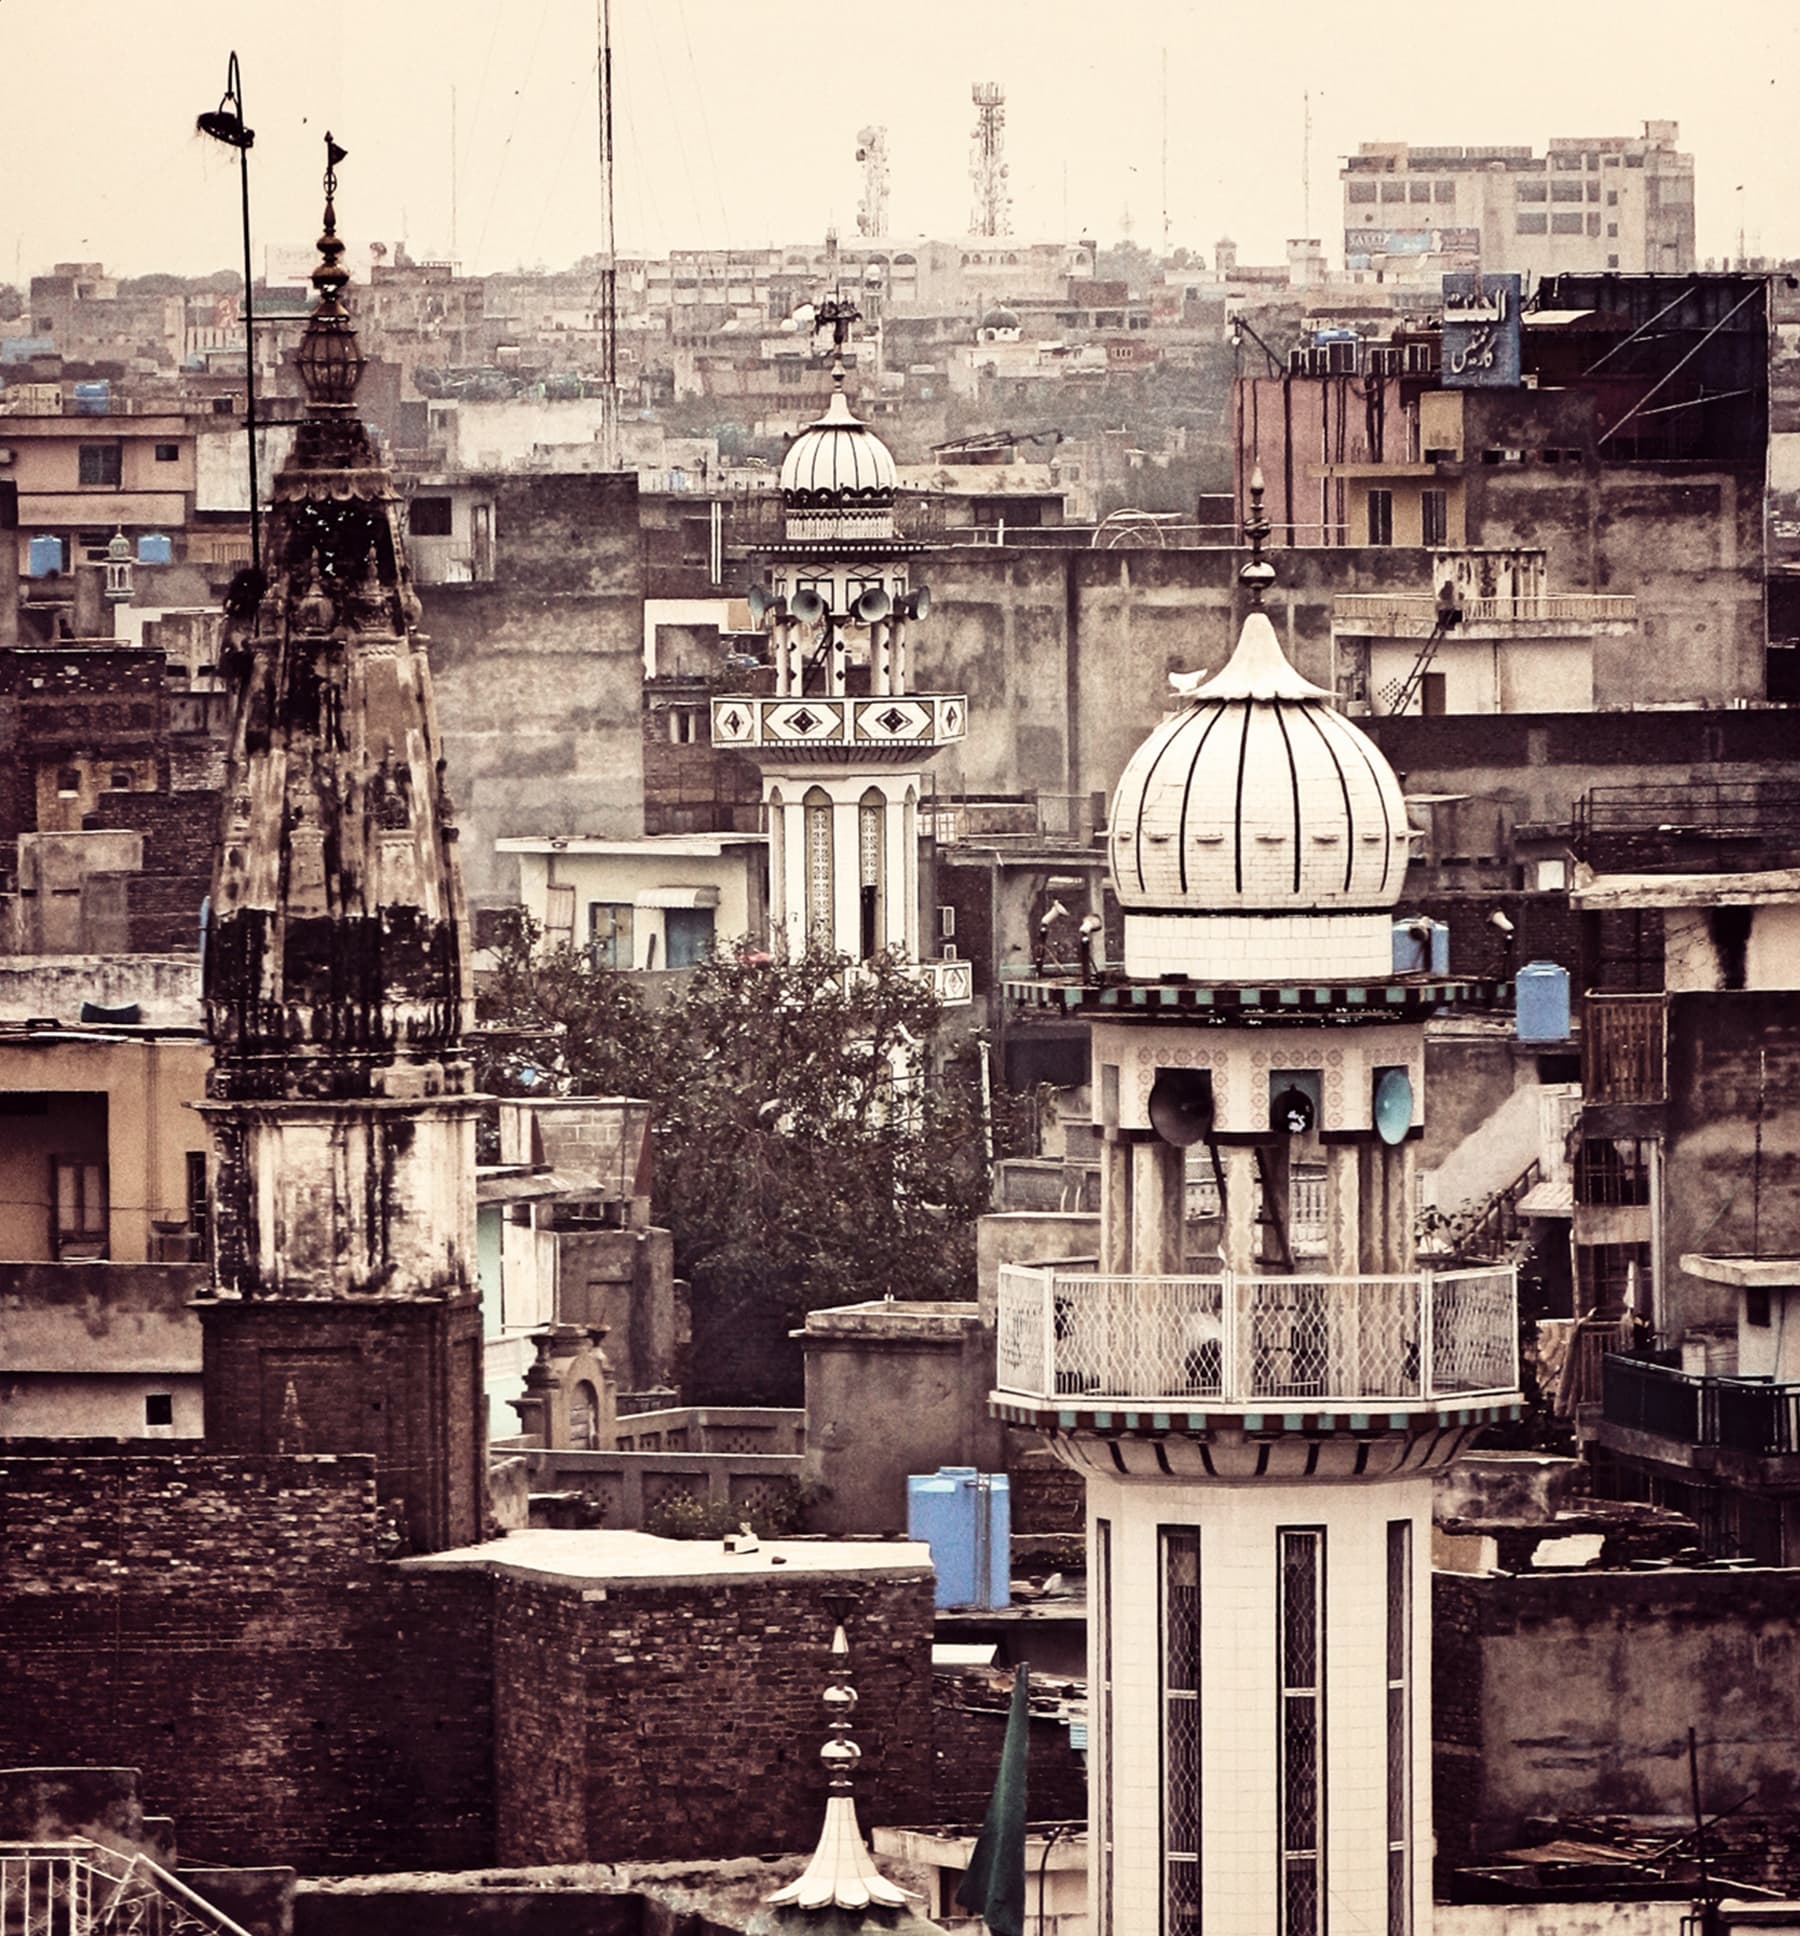 Mandir spire juxtaposed with Mosque Minar in the Bhabra bazaar neighbourhood of Old Rawalpindi.—Muhammad Bin Naveed